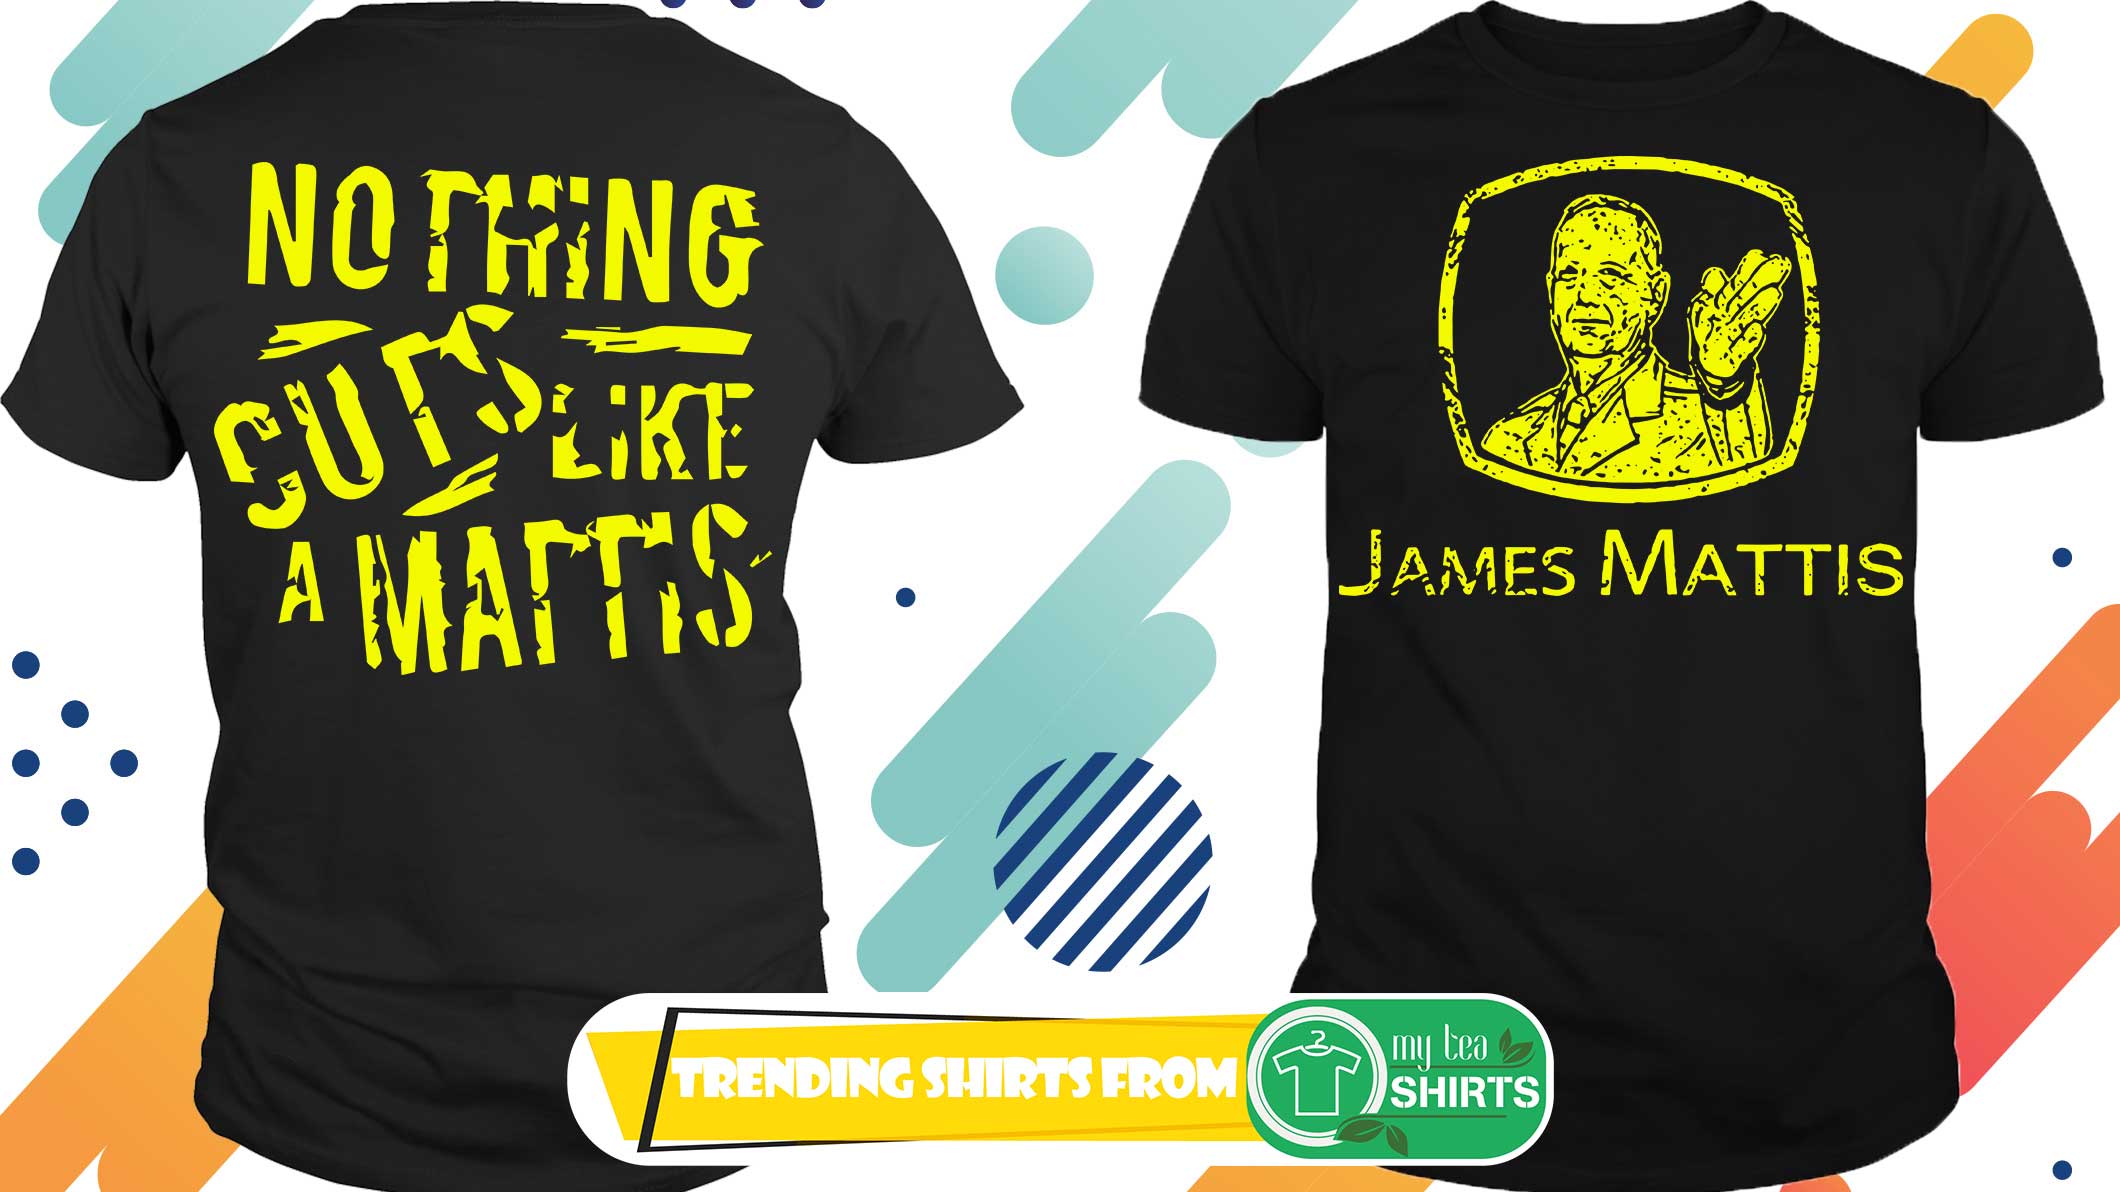 Nothing cuts like a Mattis shirt - James Mattis shirt